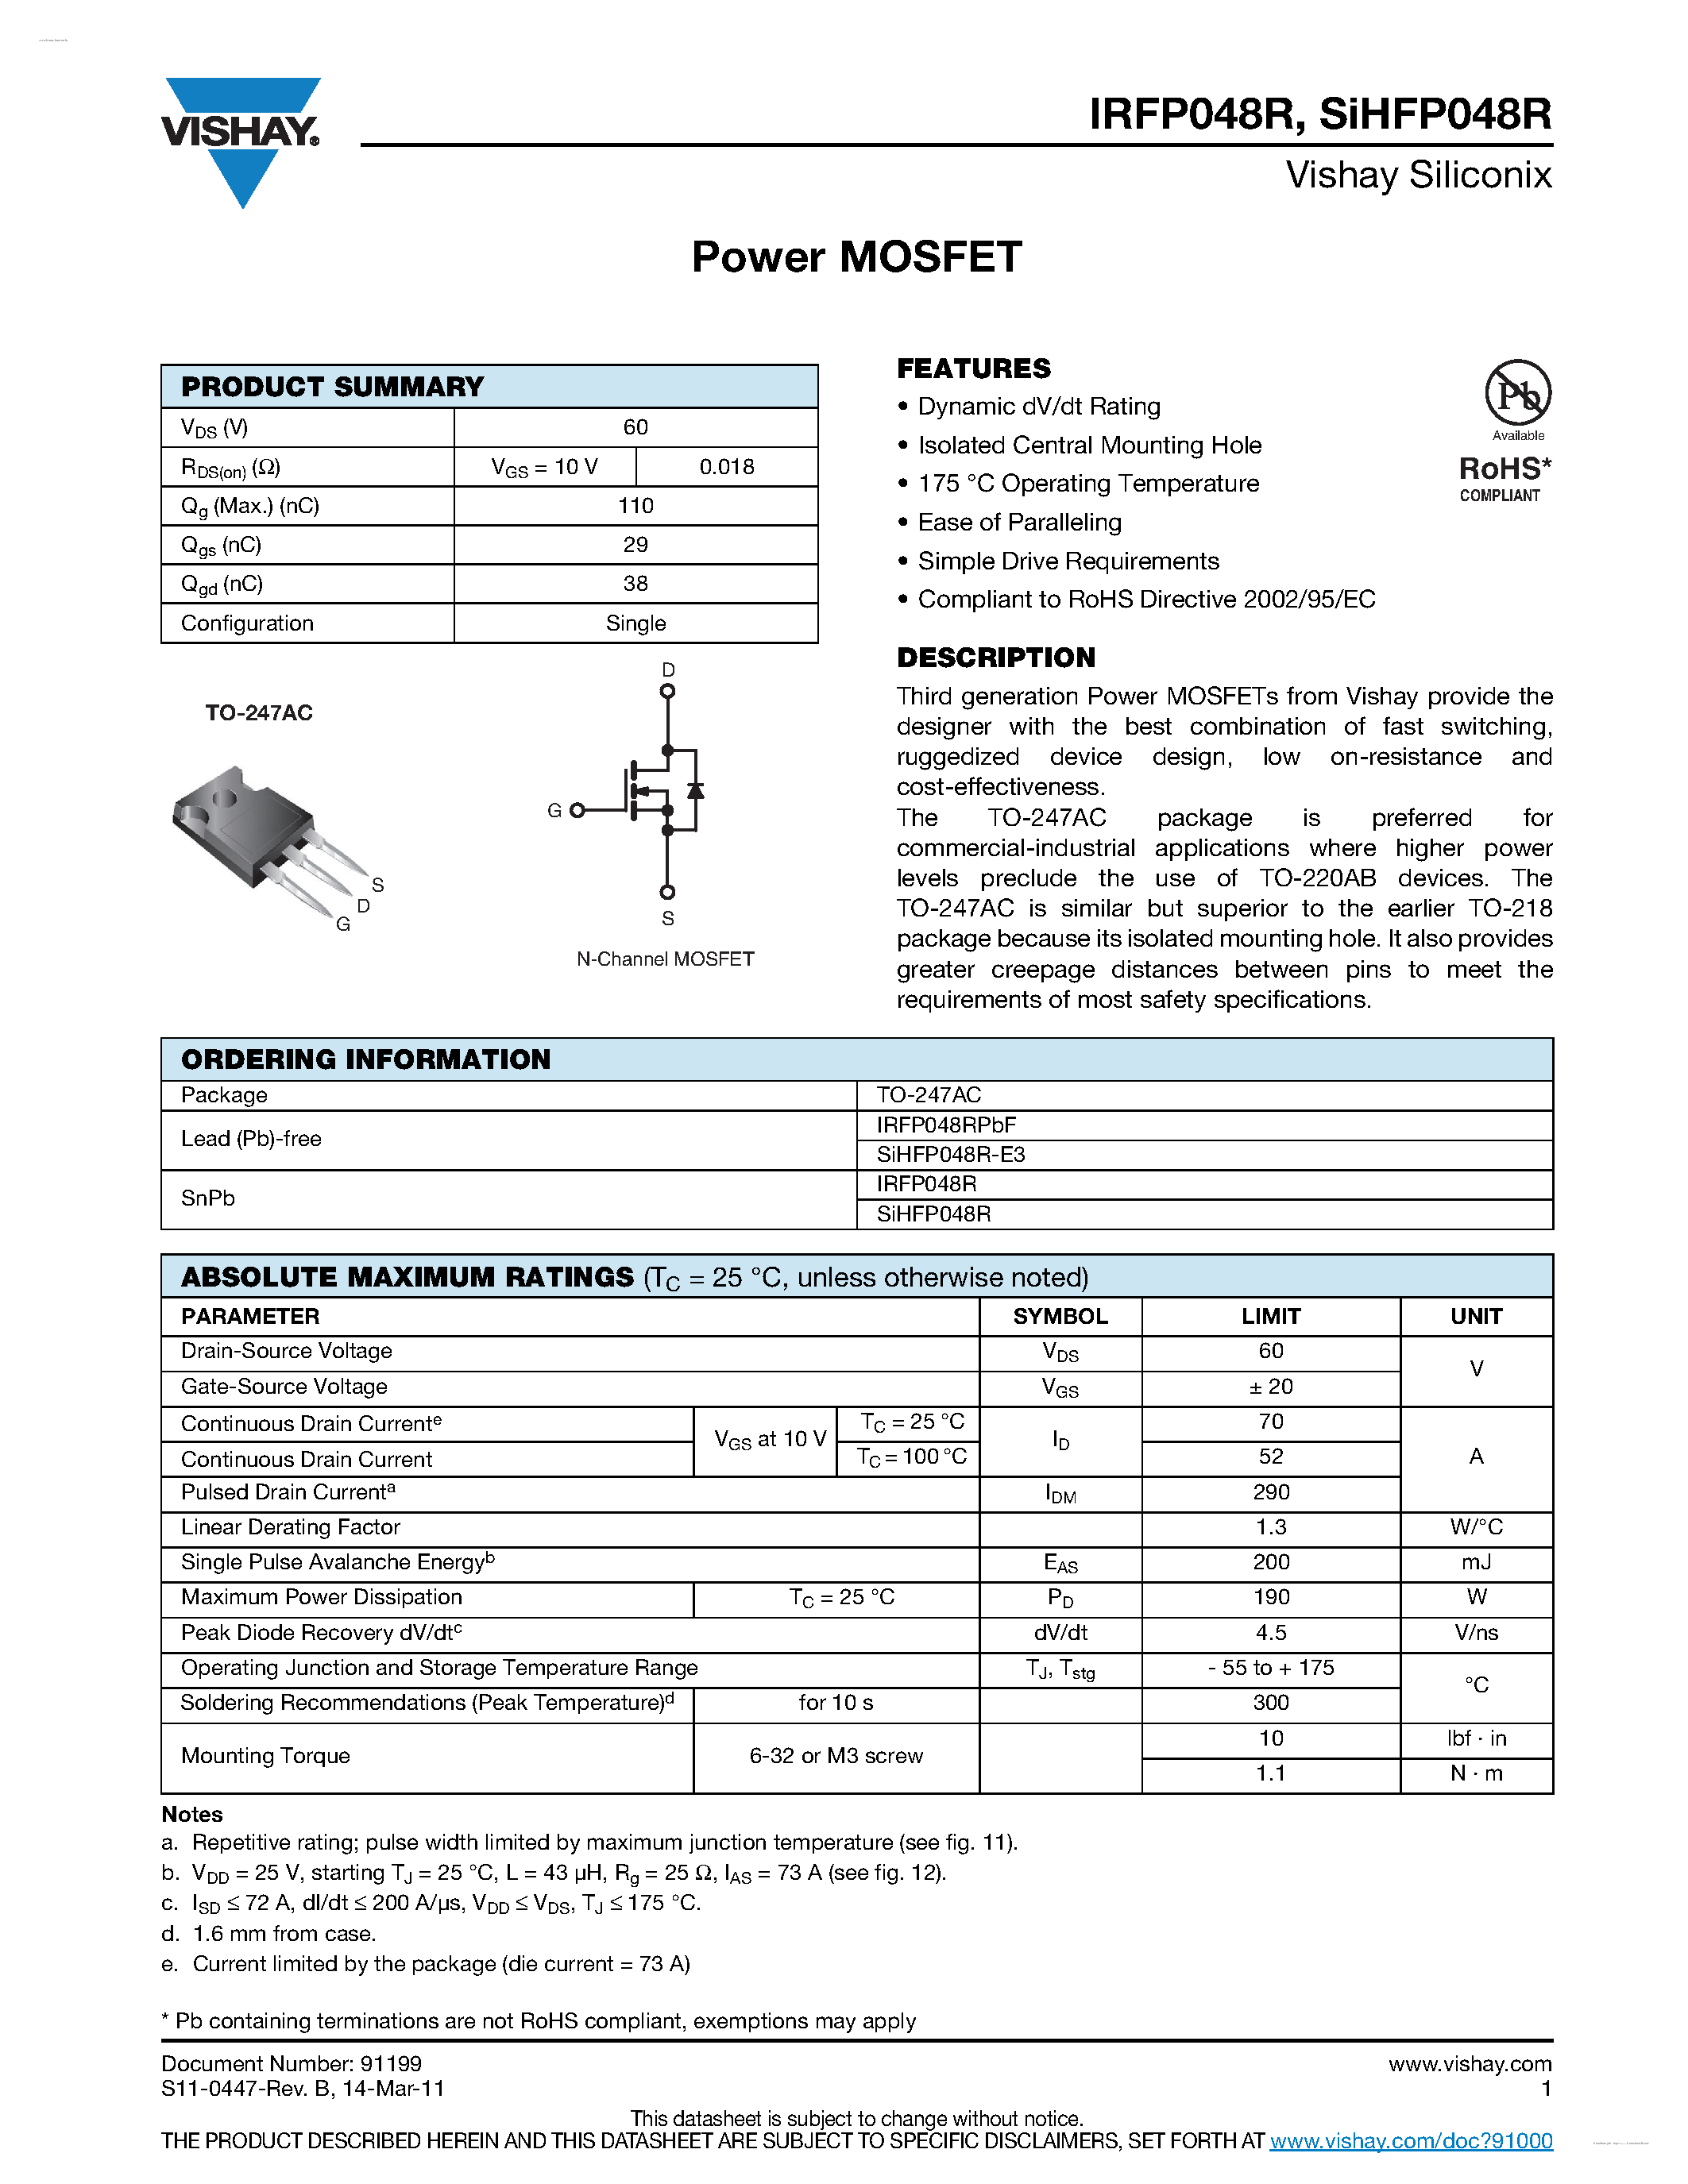 Datasheet IRFP048R - Power MOSFET page 1